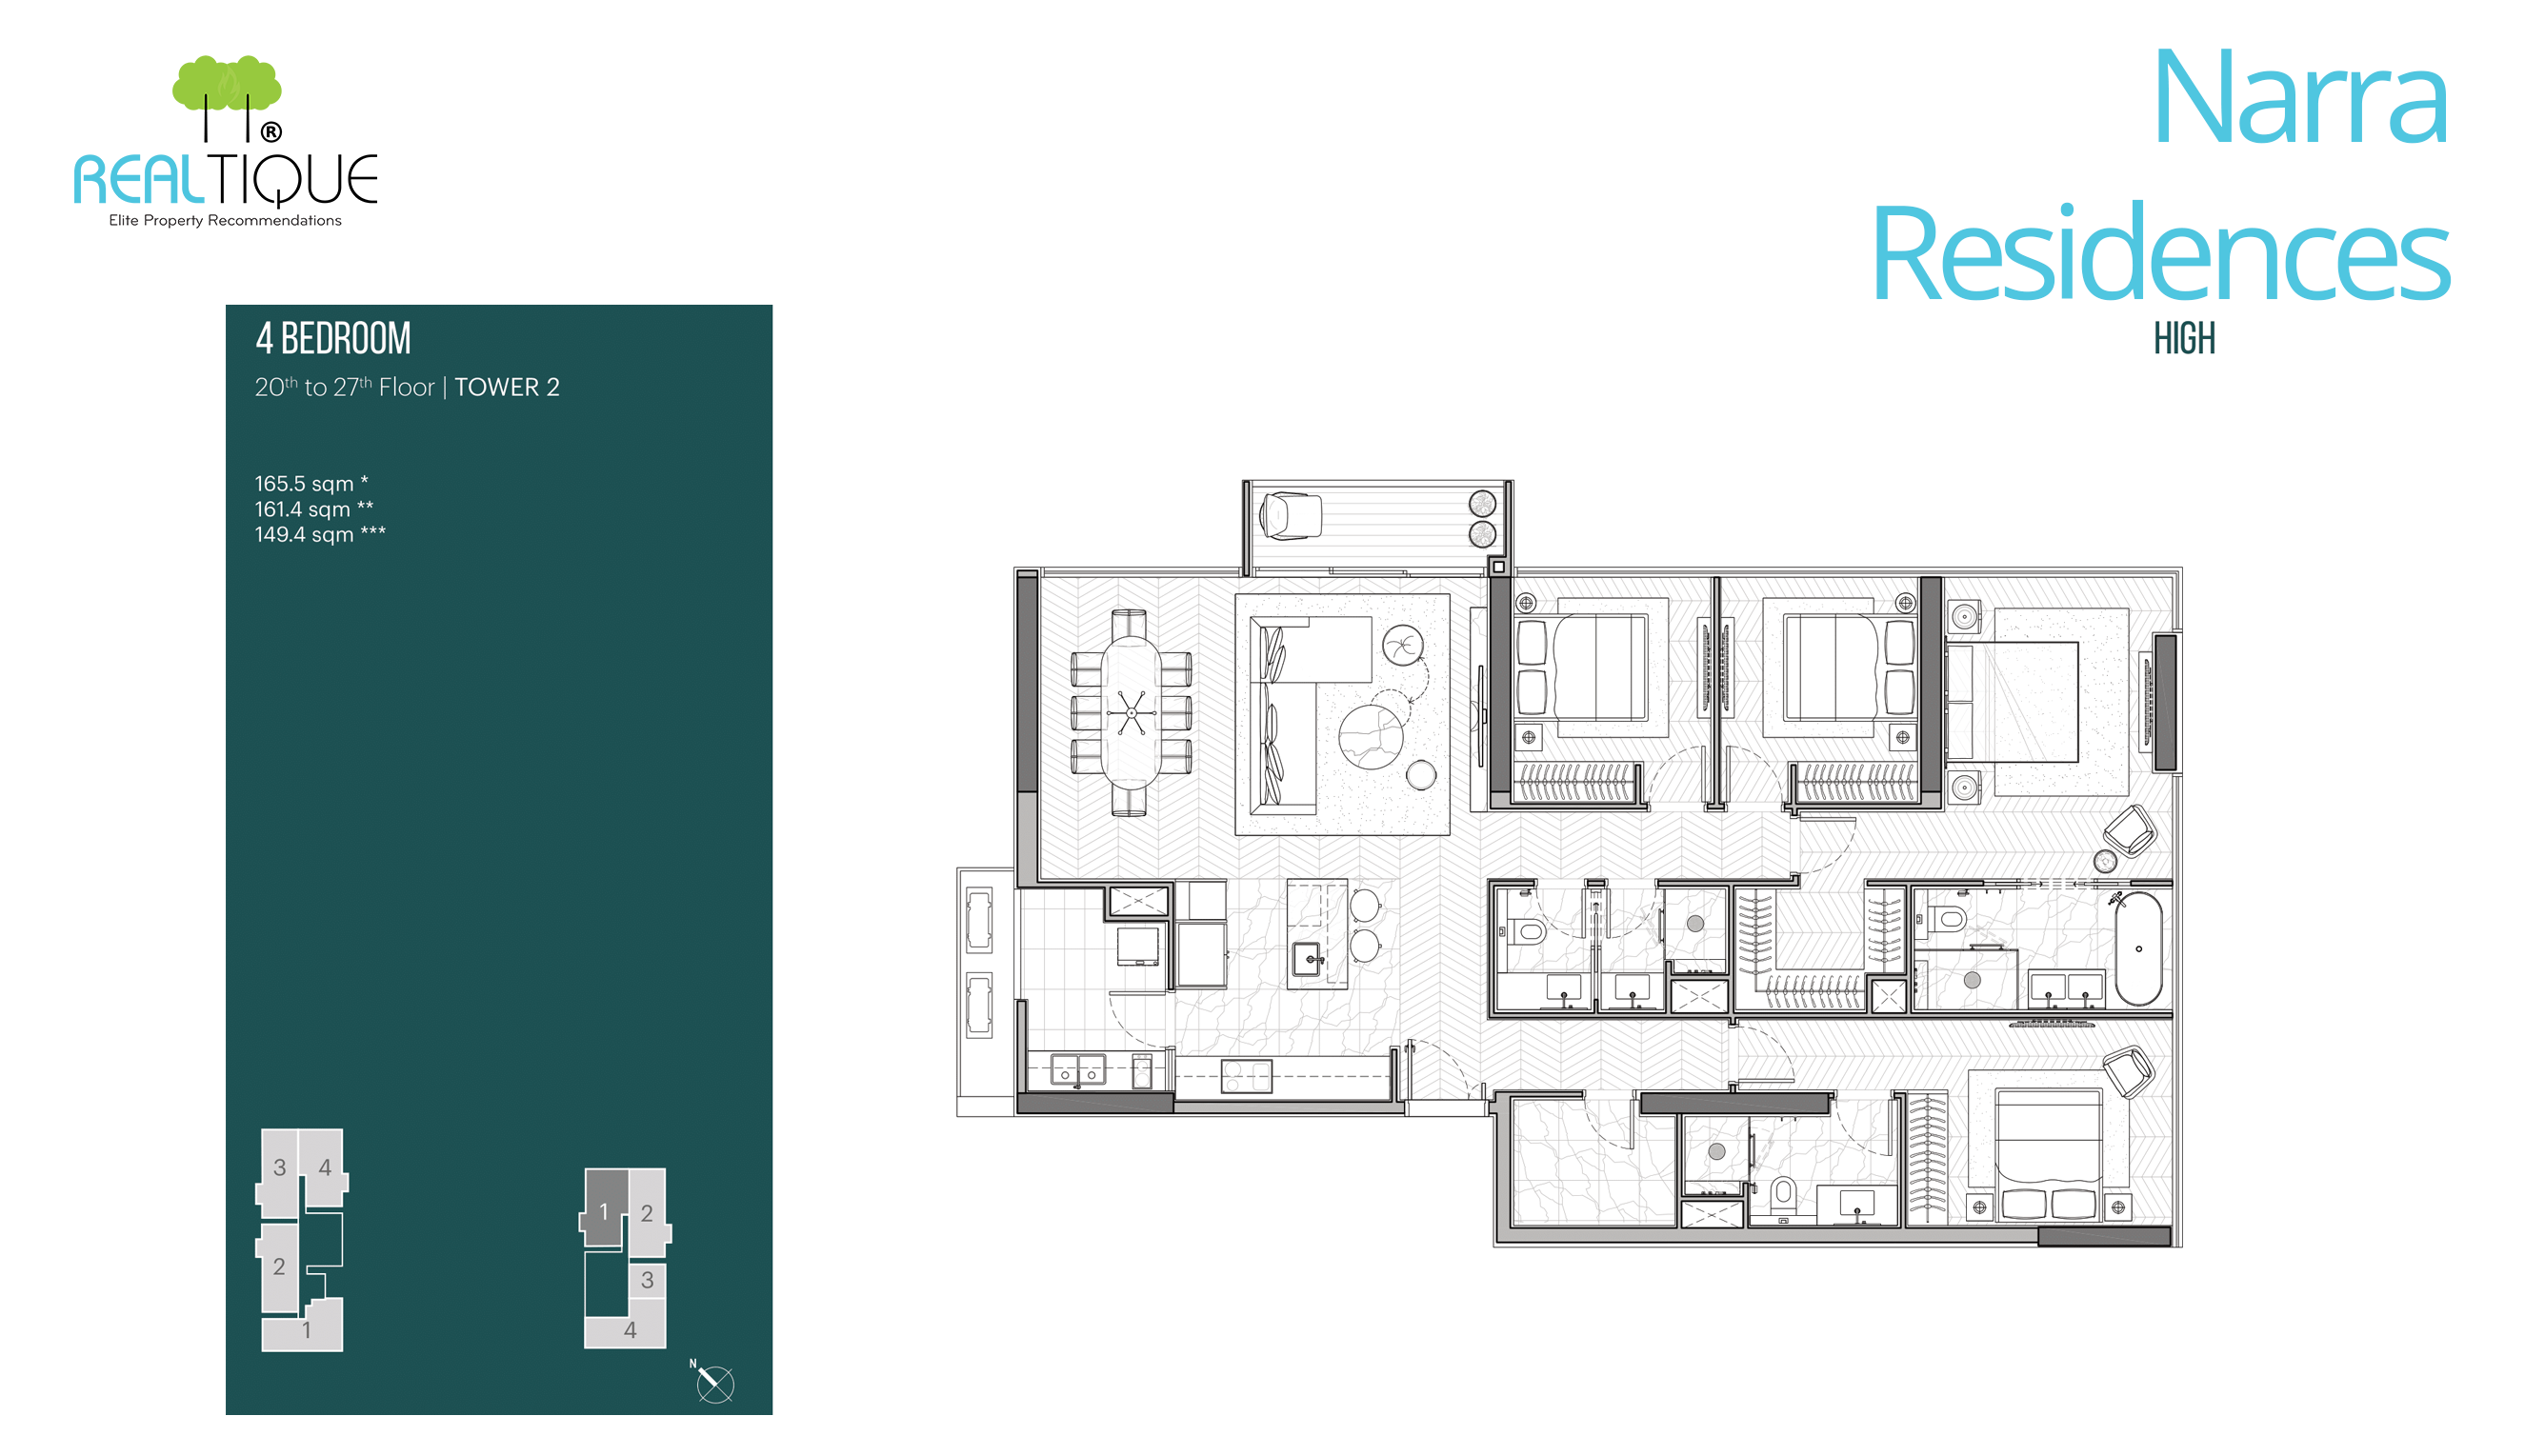 4 Bedroom Layout of Narra Residences (MU8)